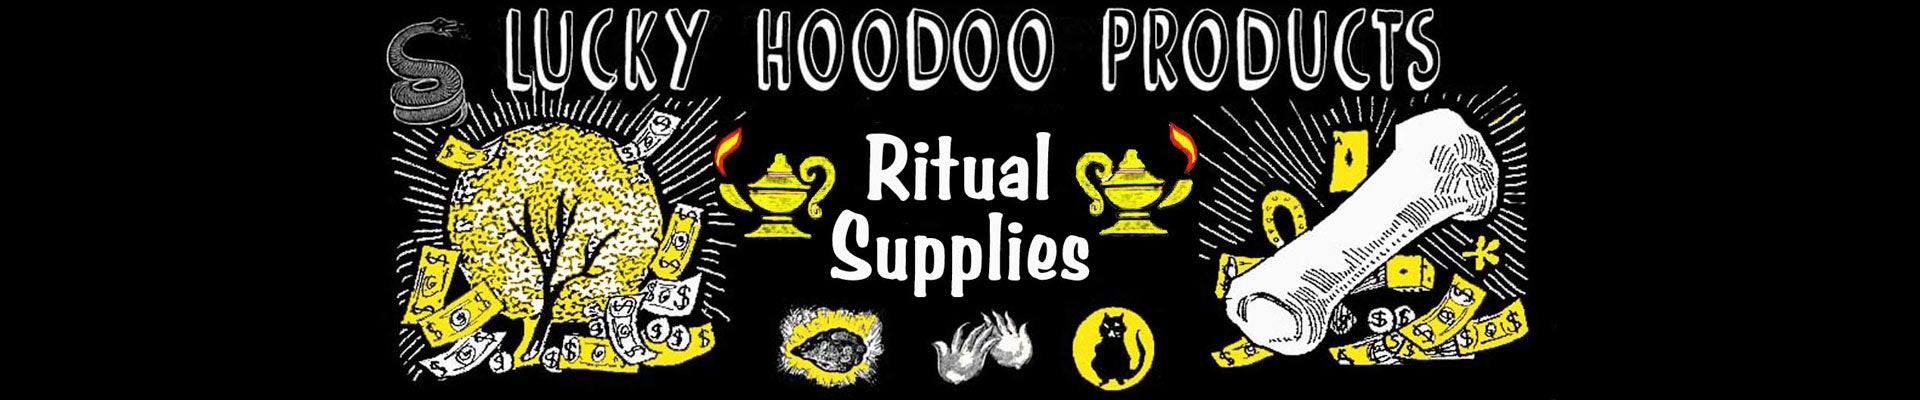 Ritual Supplies